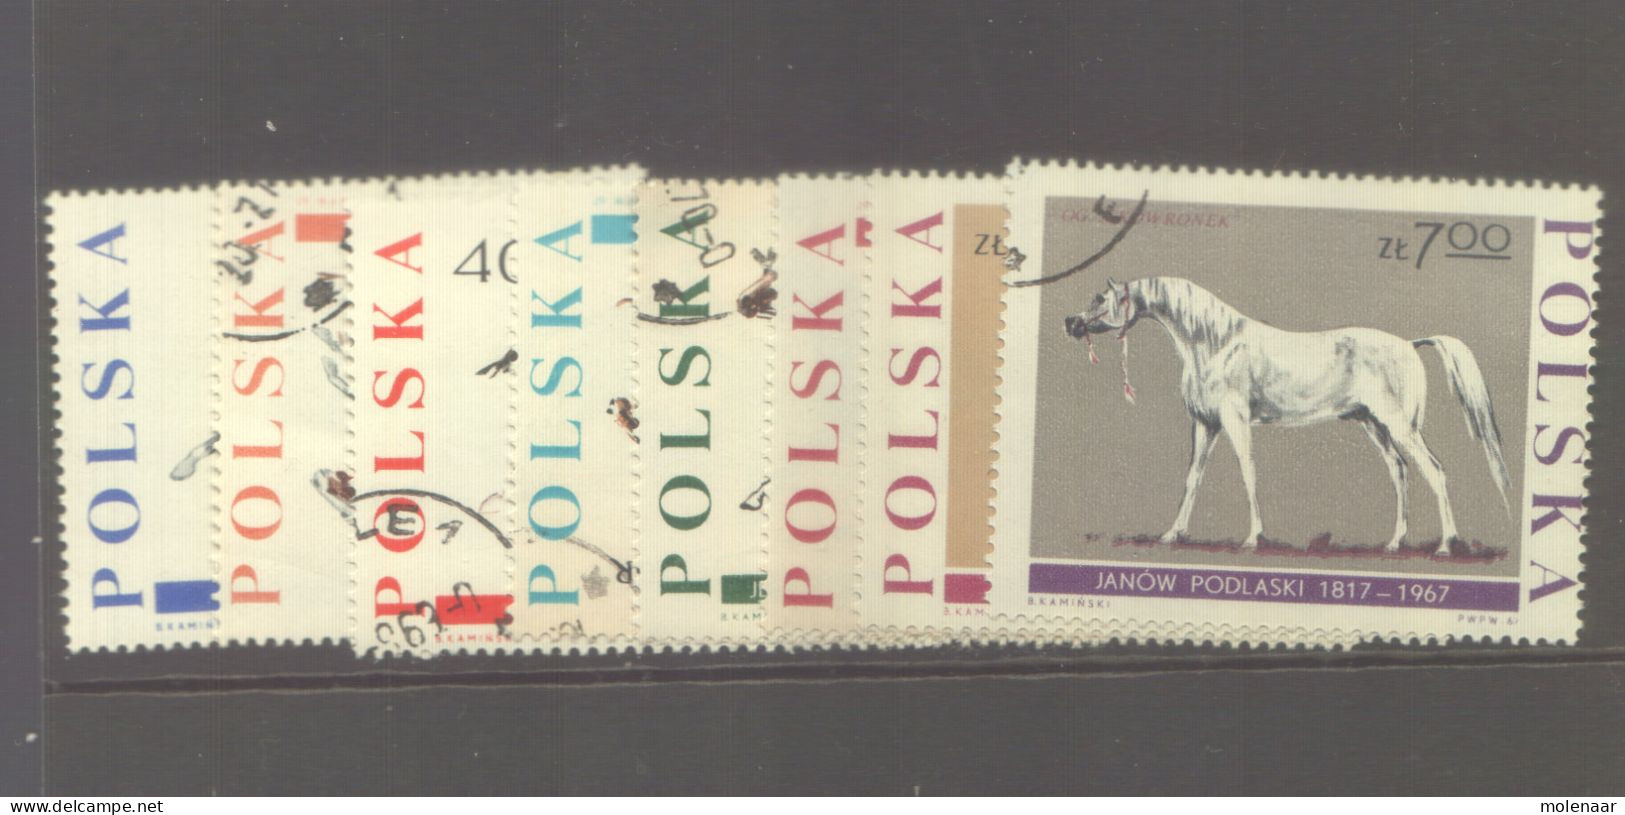 Postzegels > Europa > Polen > 1944-.... Republiek > 1961-70 > Gebruikt No. 1734-1741 (11994) - Gebraucht